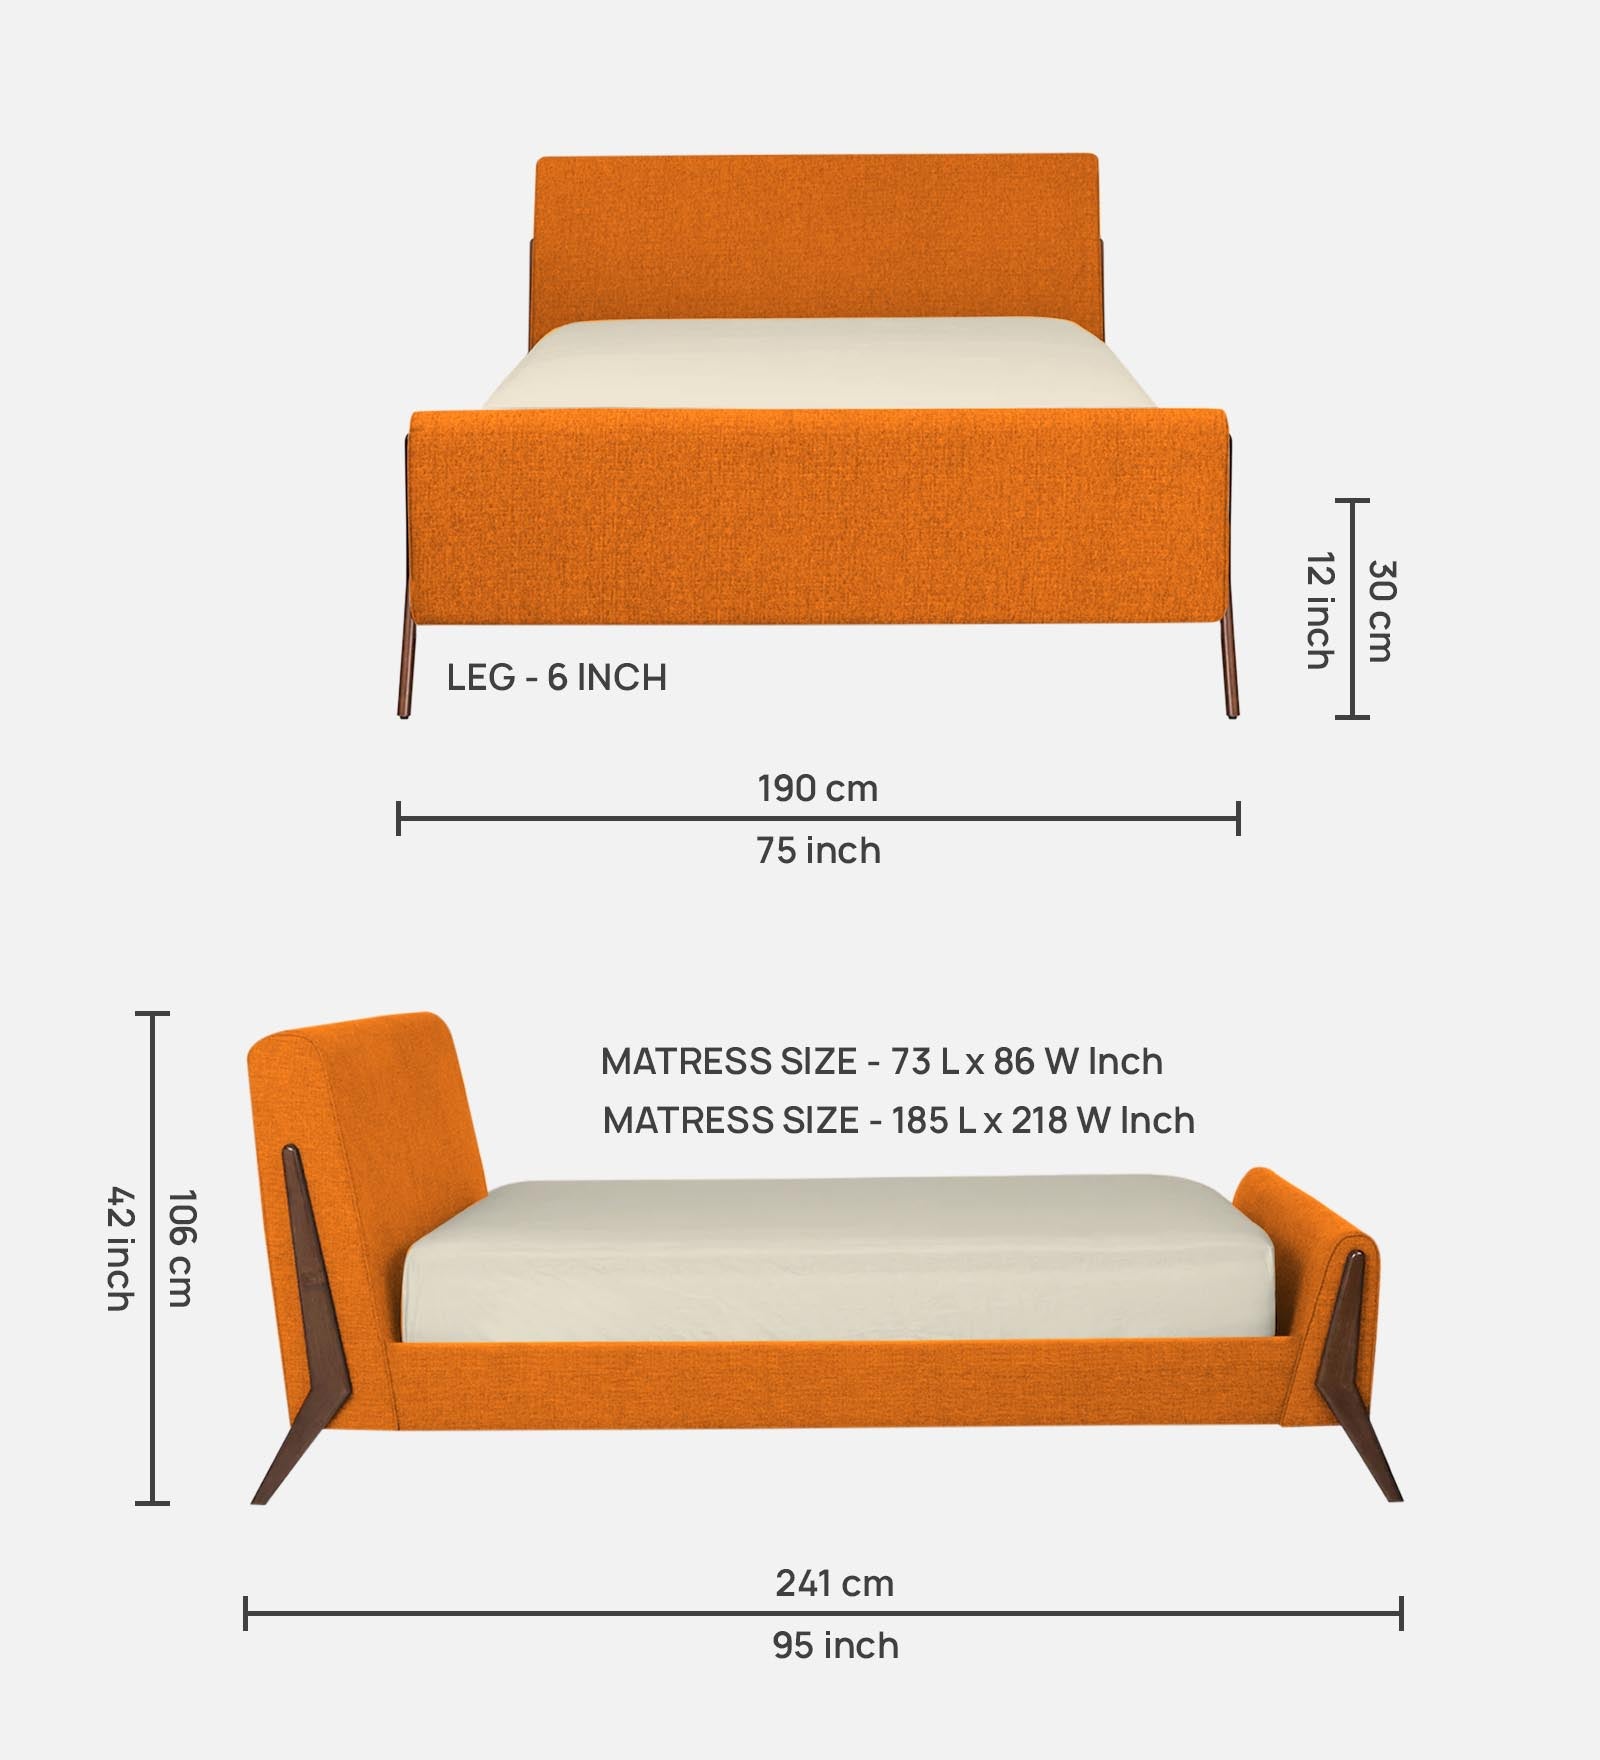 Catla Fabric King Size Bed In Vivid Orange Colour